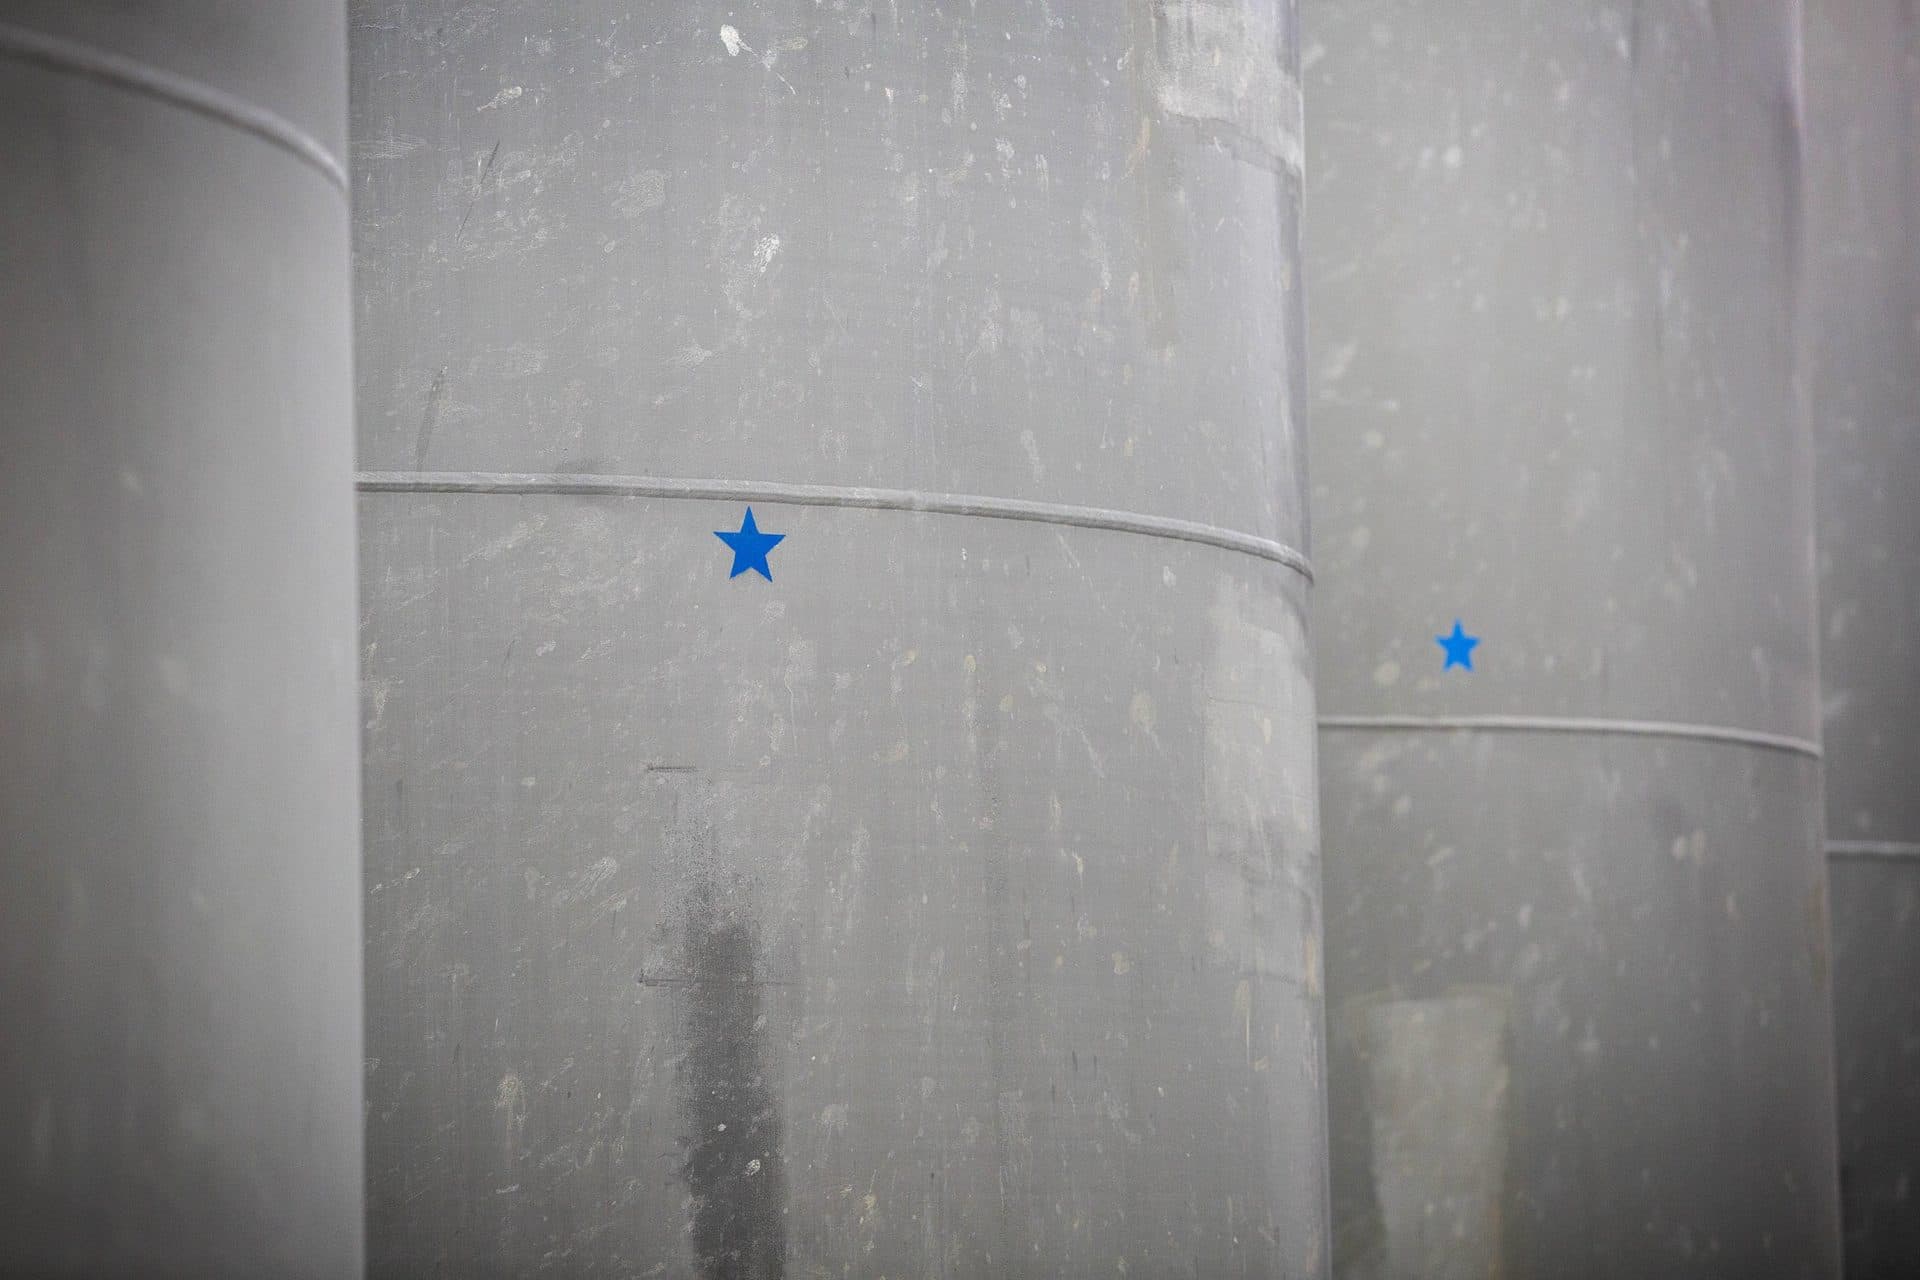 The blue stars on spent fuel casks at Pilgrim nuclear power station mark radiological survey points. (Robin Lubbock/WBUR)